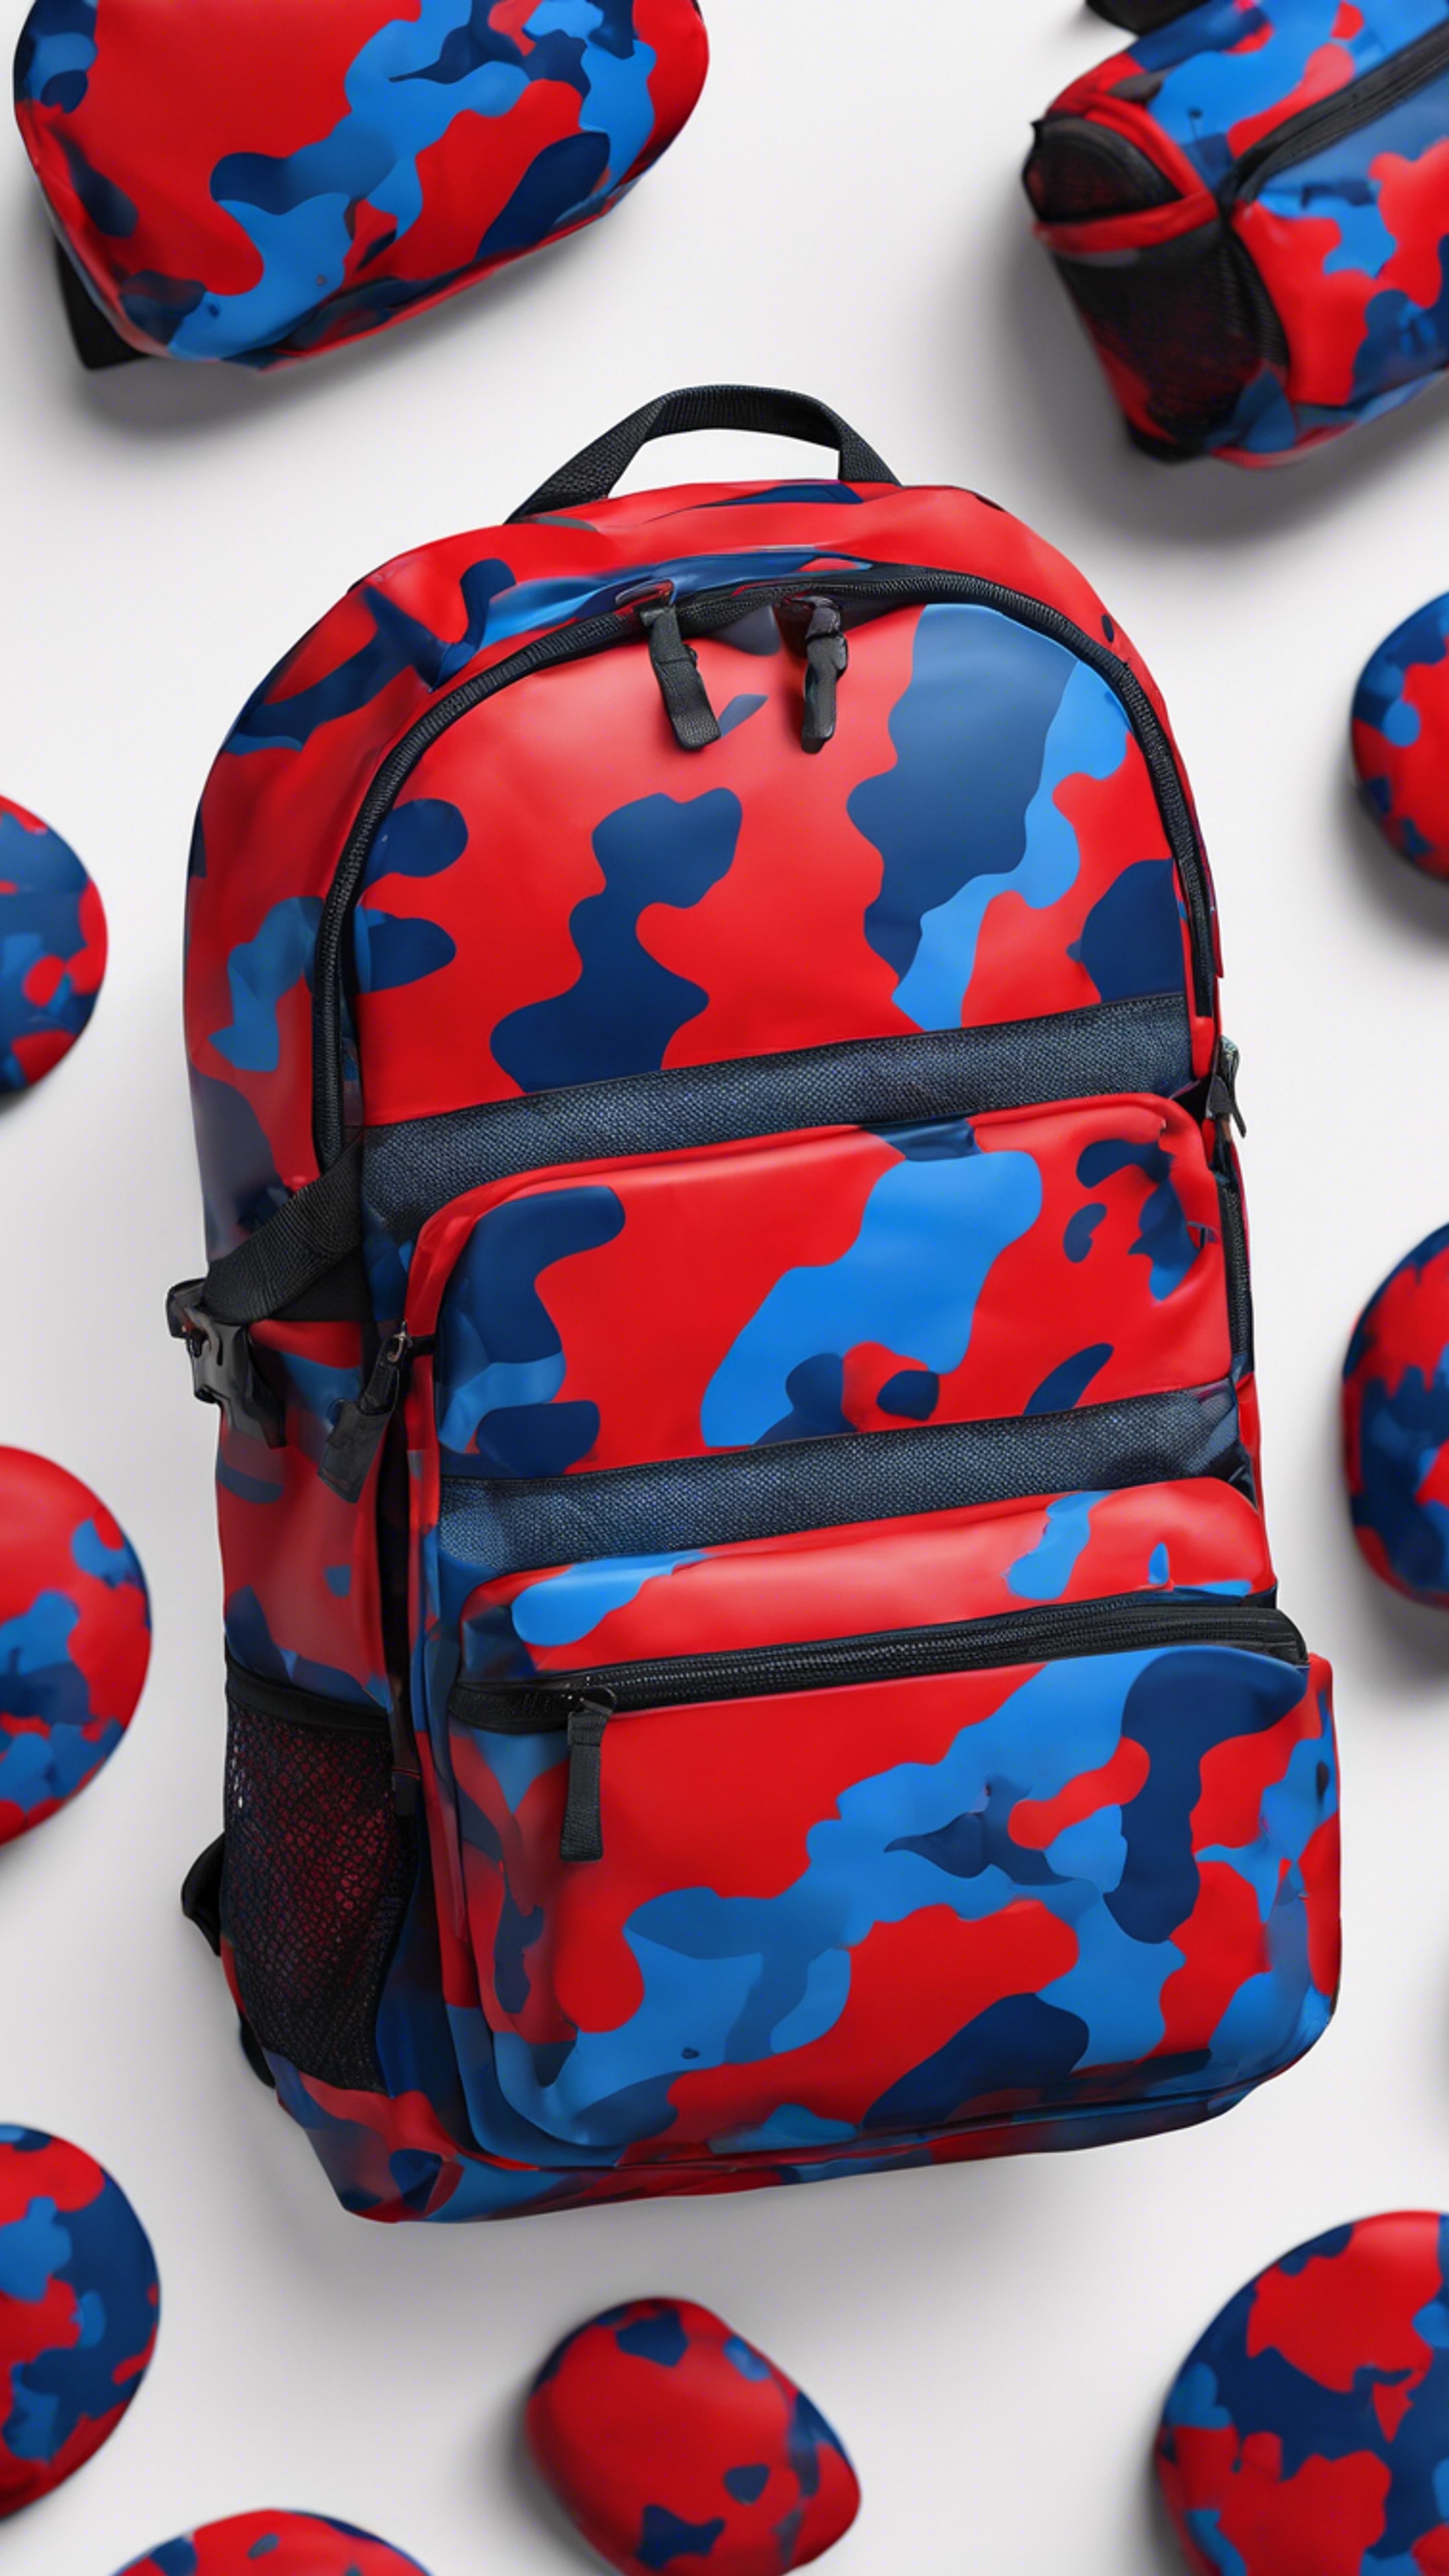 A seamless pattern of red and blue camouflage like on a sports backpack. Tapeta na zeď[ebf2c58b20f943e08eab]